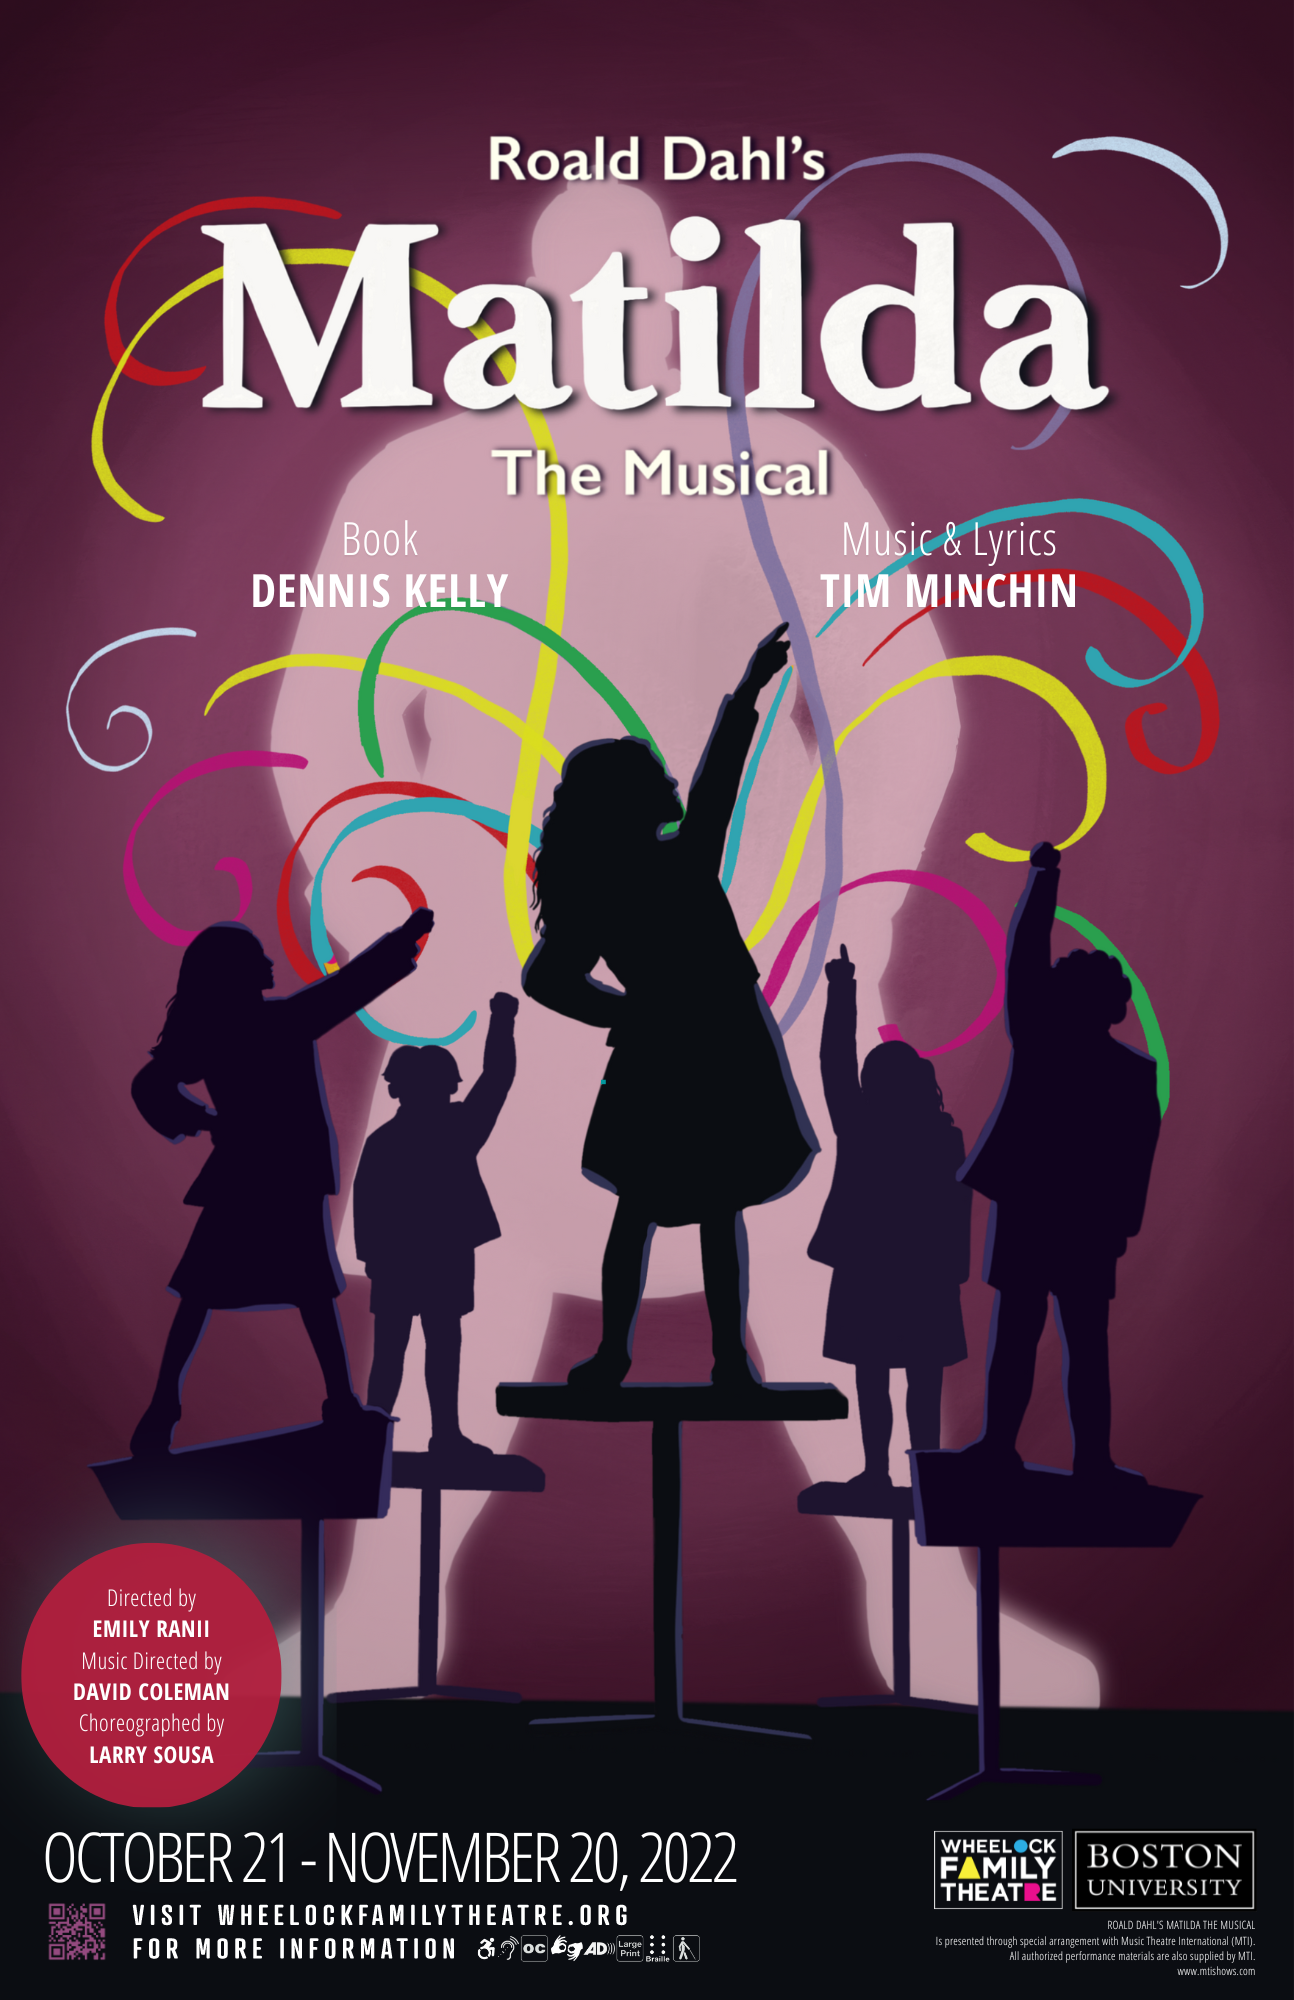 Roald Dahl's Matilda, the Musical